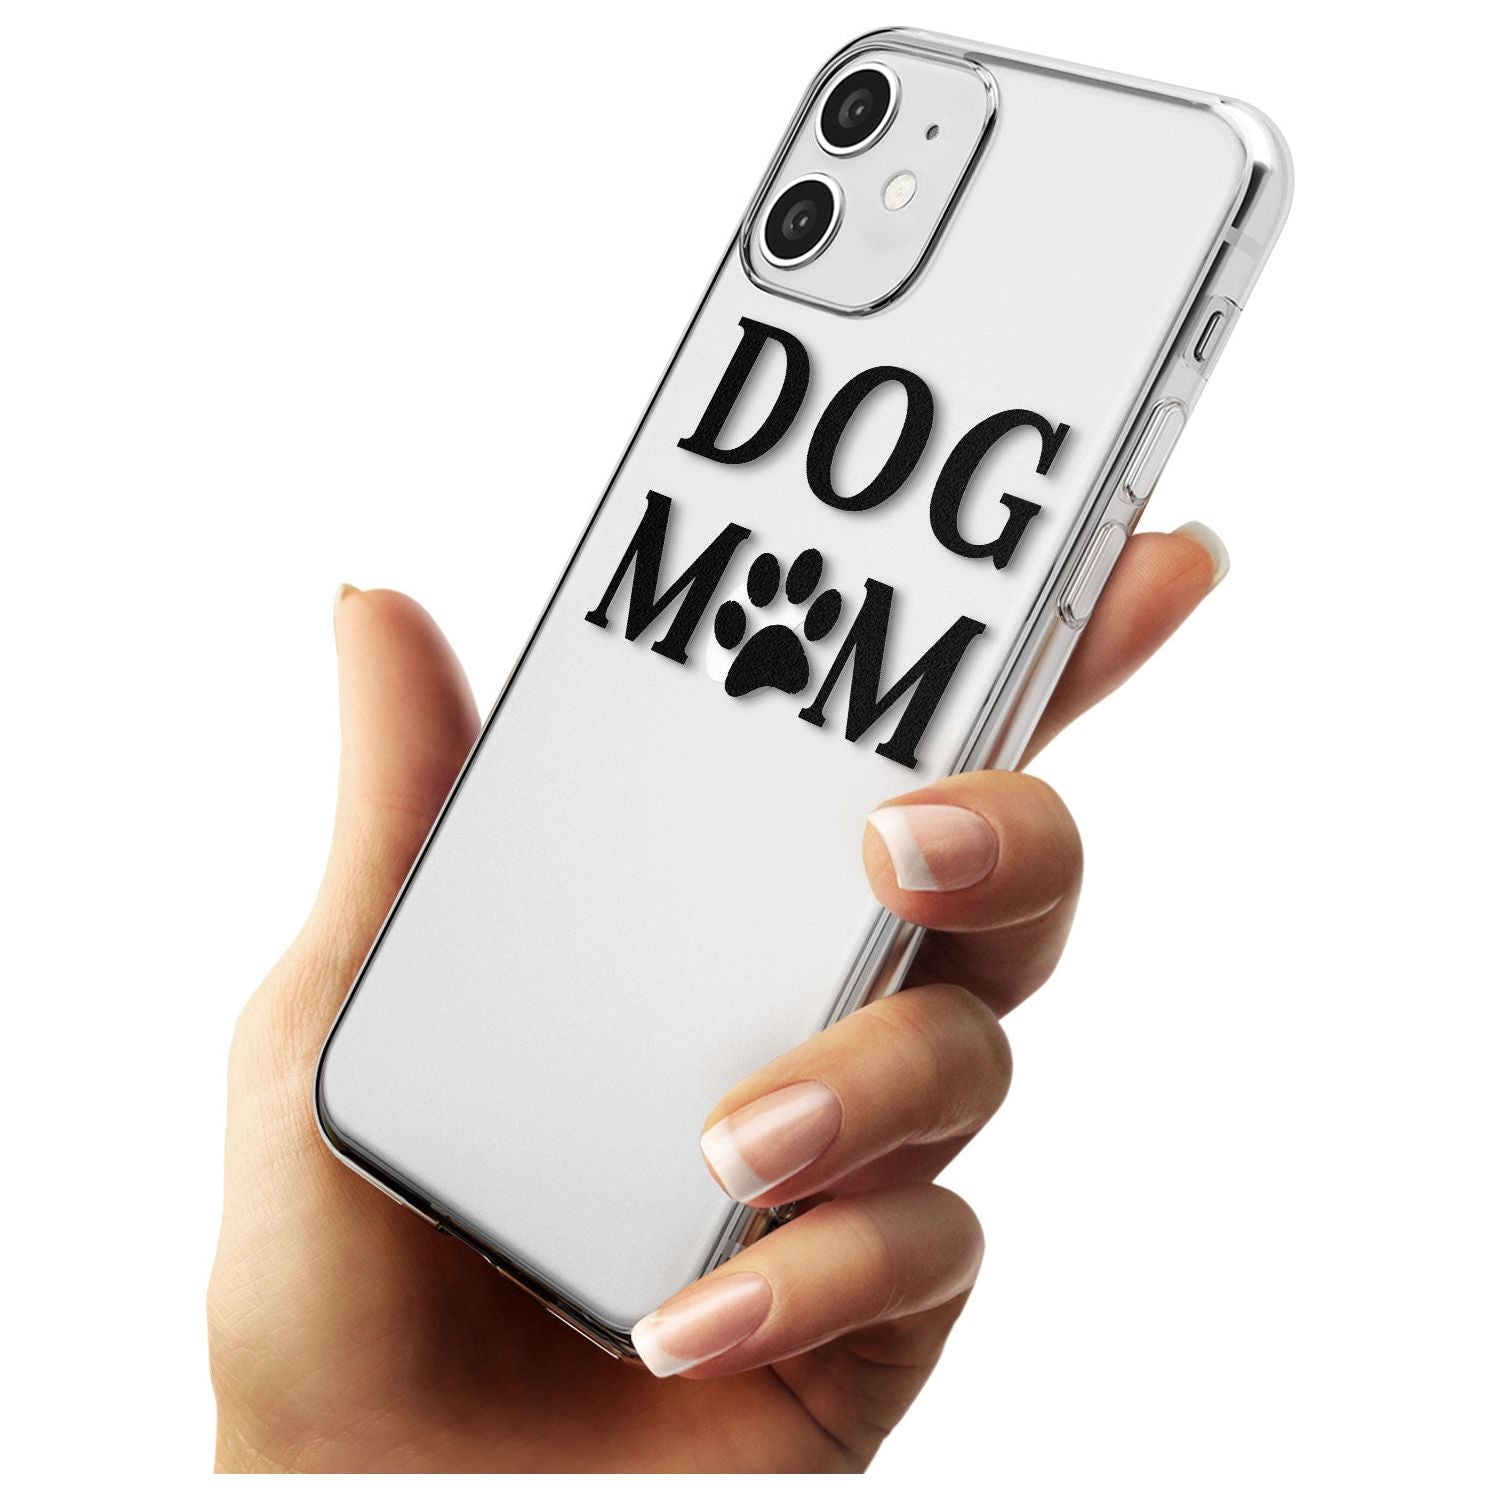 Dog Mom Paw Print Slim TPU Phone Case for iPhone 11